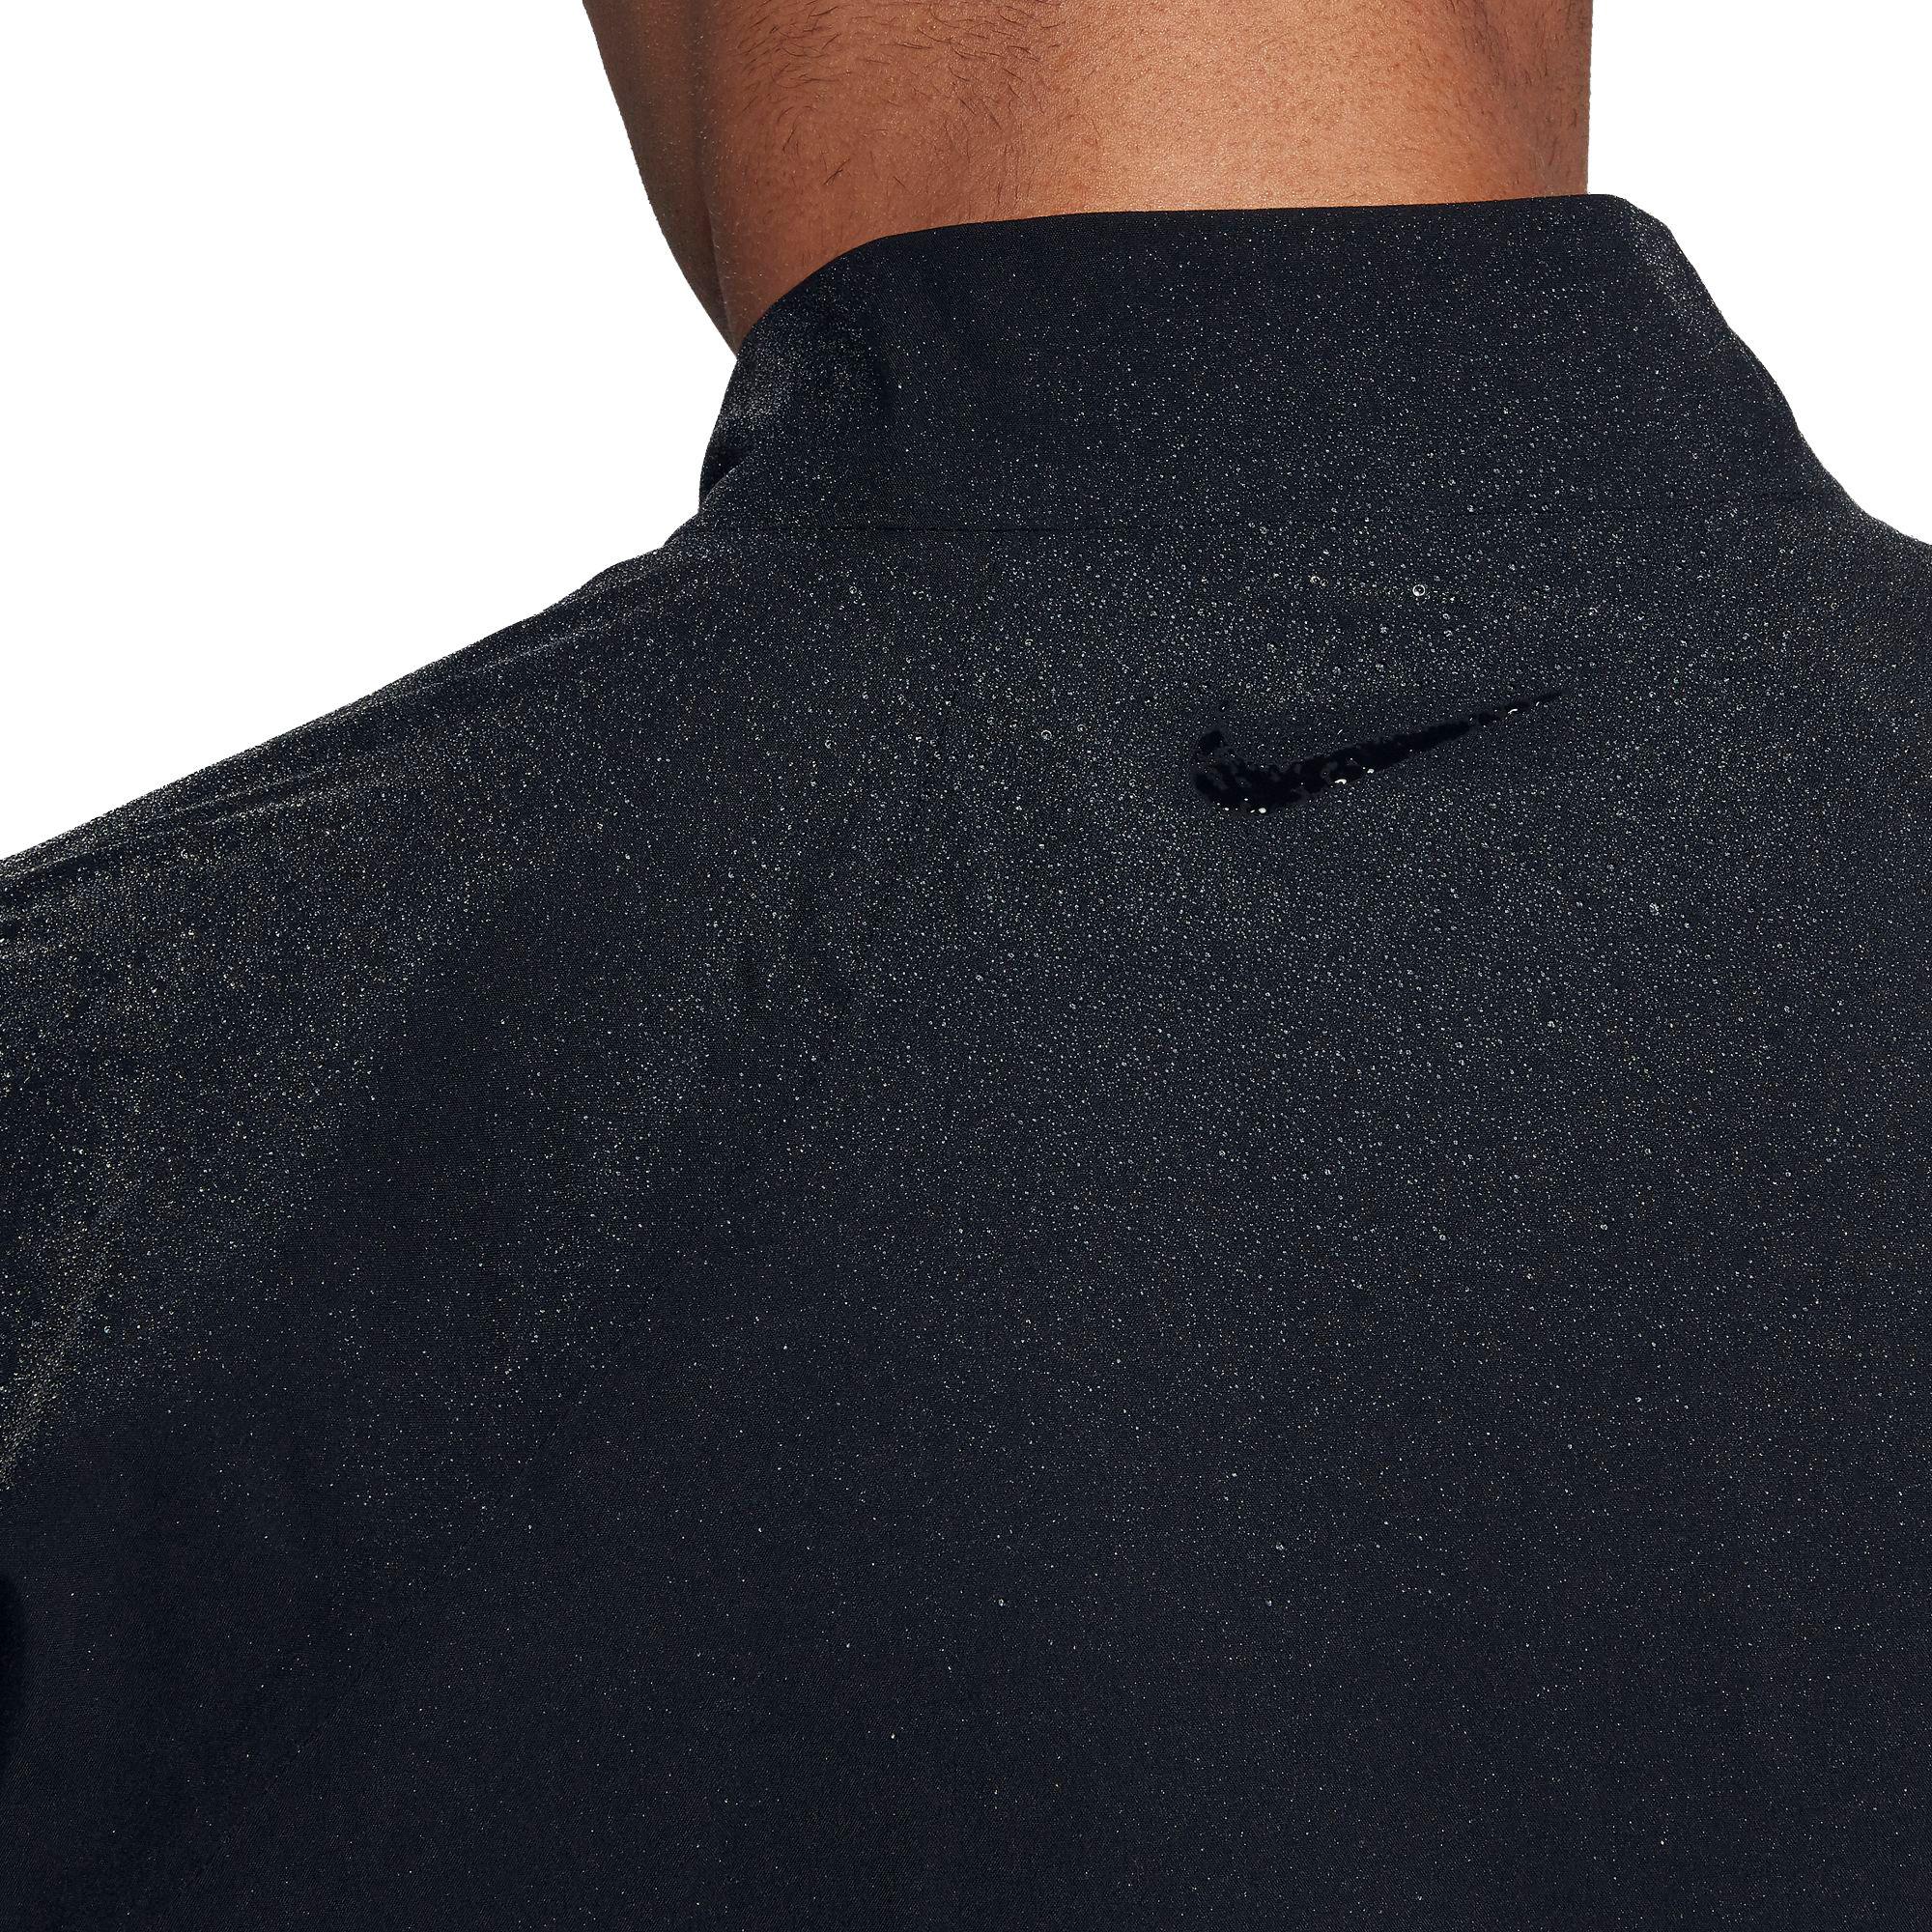 Nike Synthetic Hypershield Golf Rain Jacket in Black for Men - Lyst